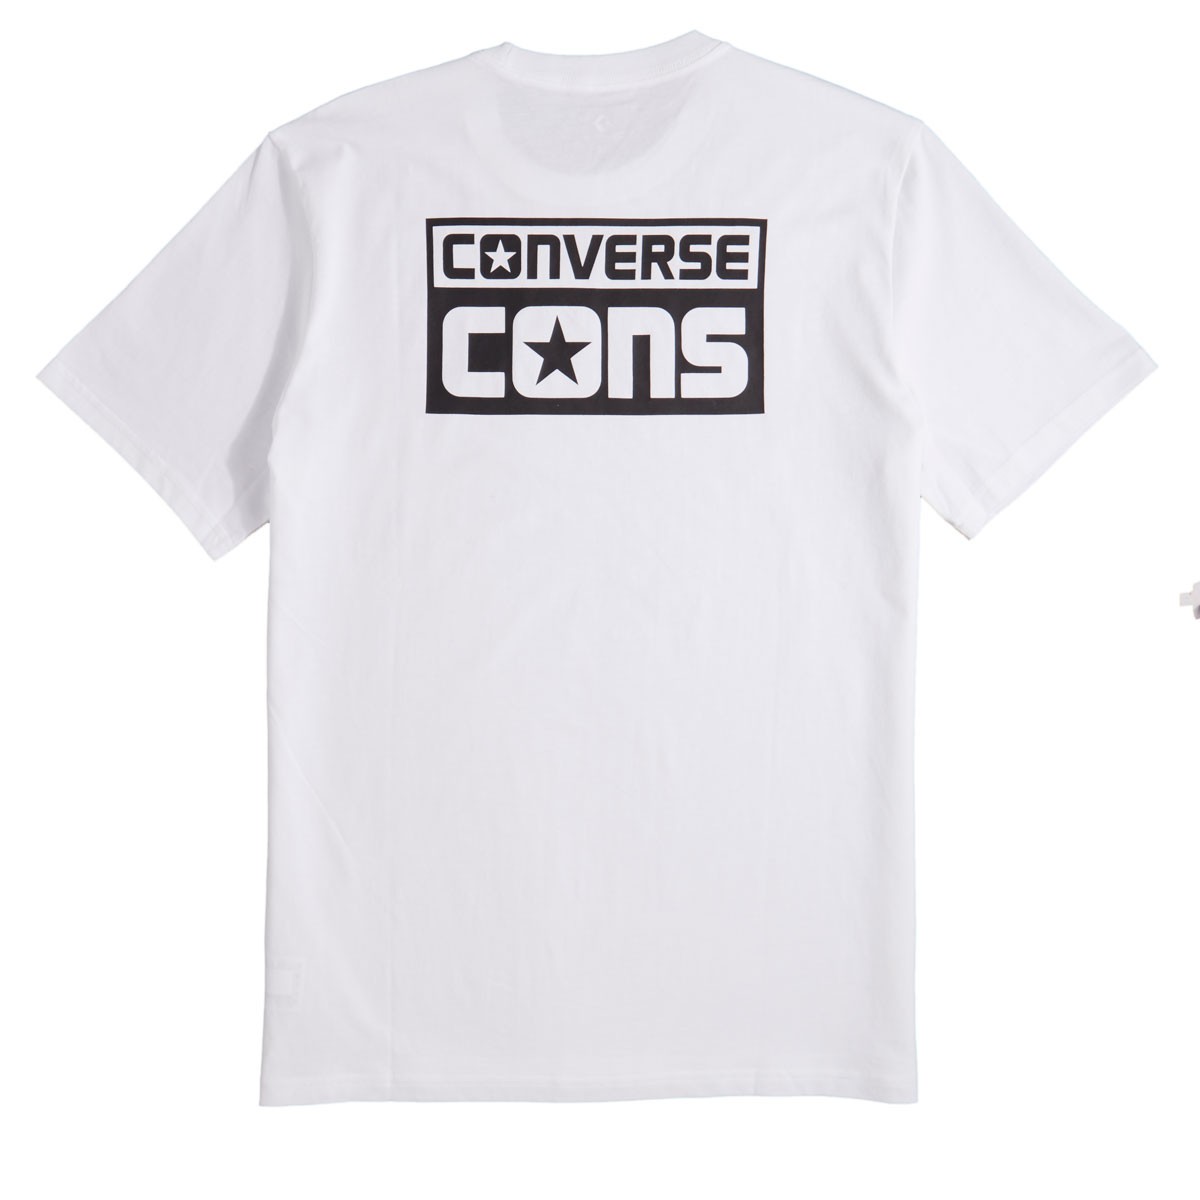 Converse Cons Logo T-Shirt White 10005693-a02-102 | eBay